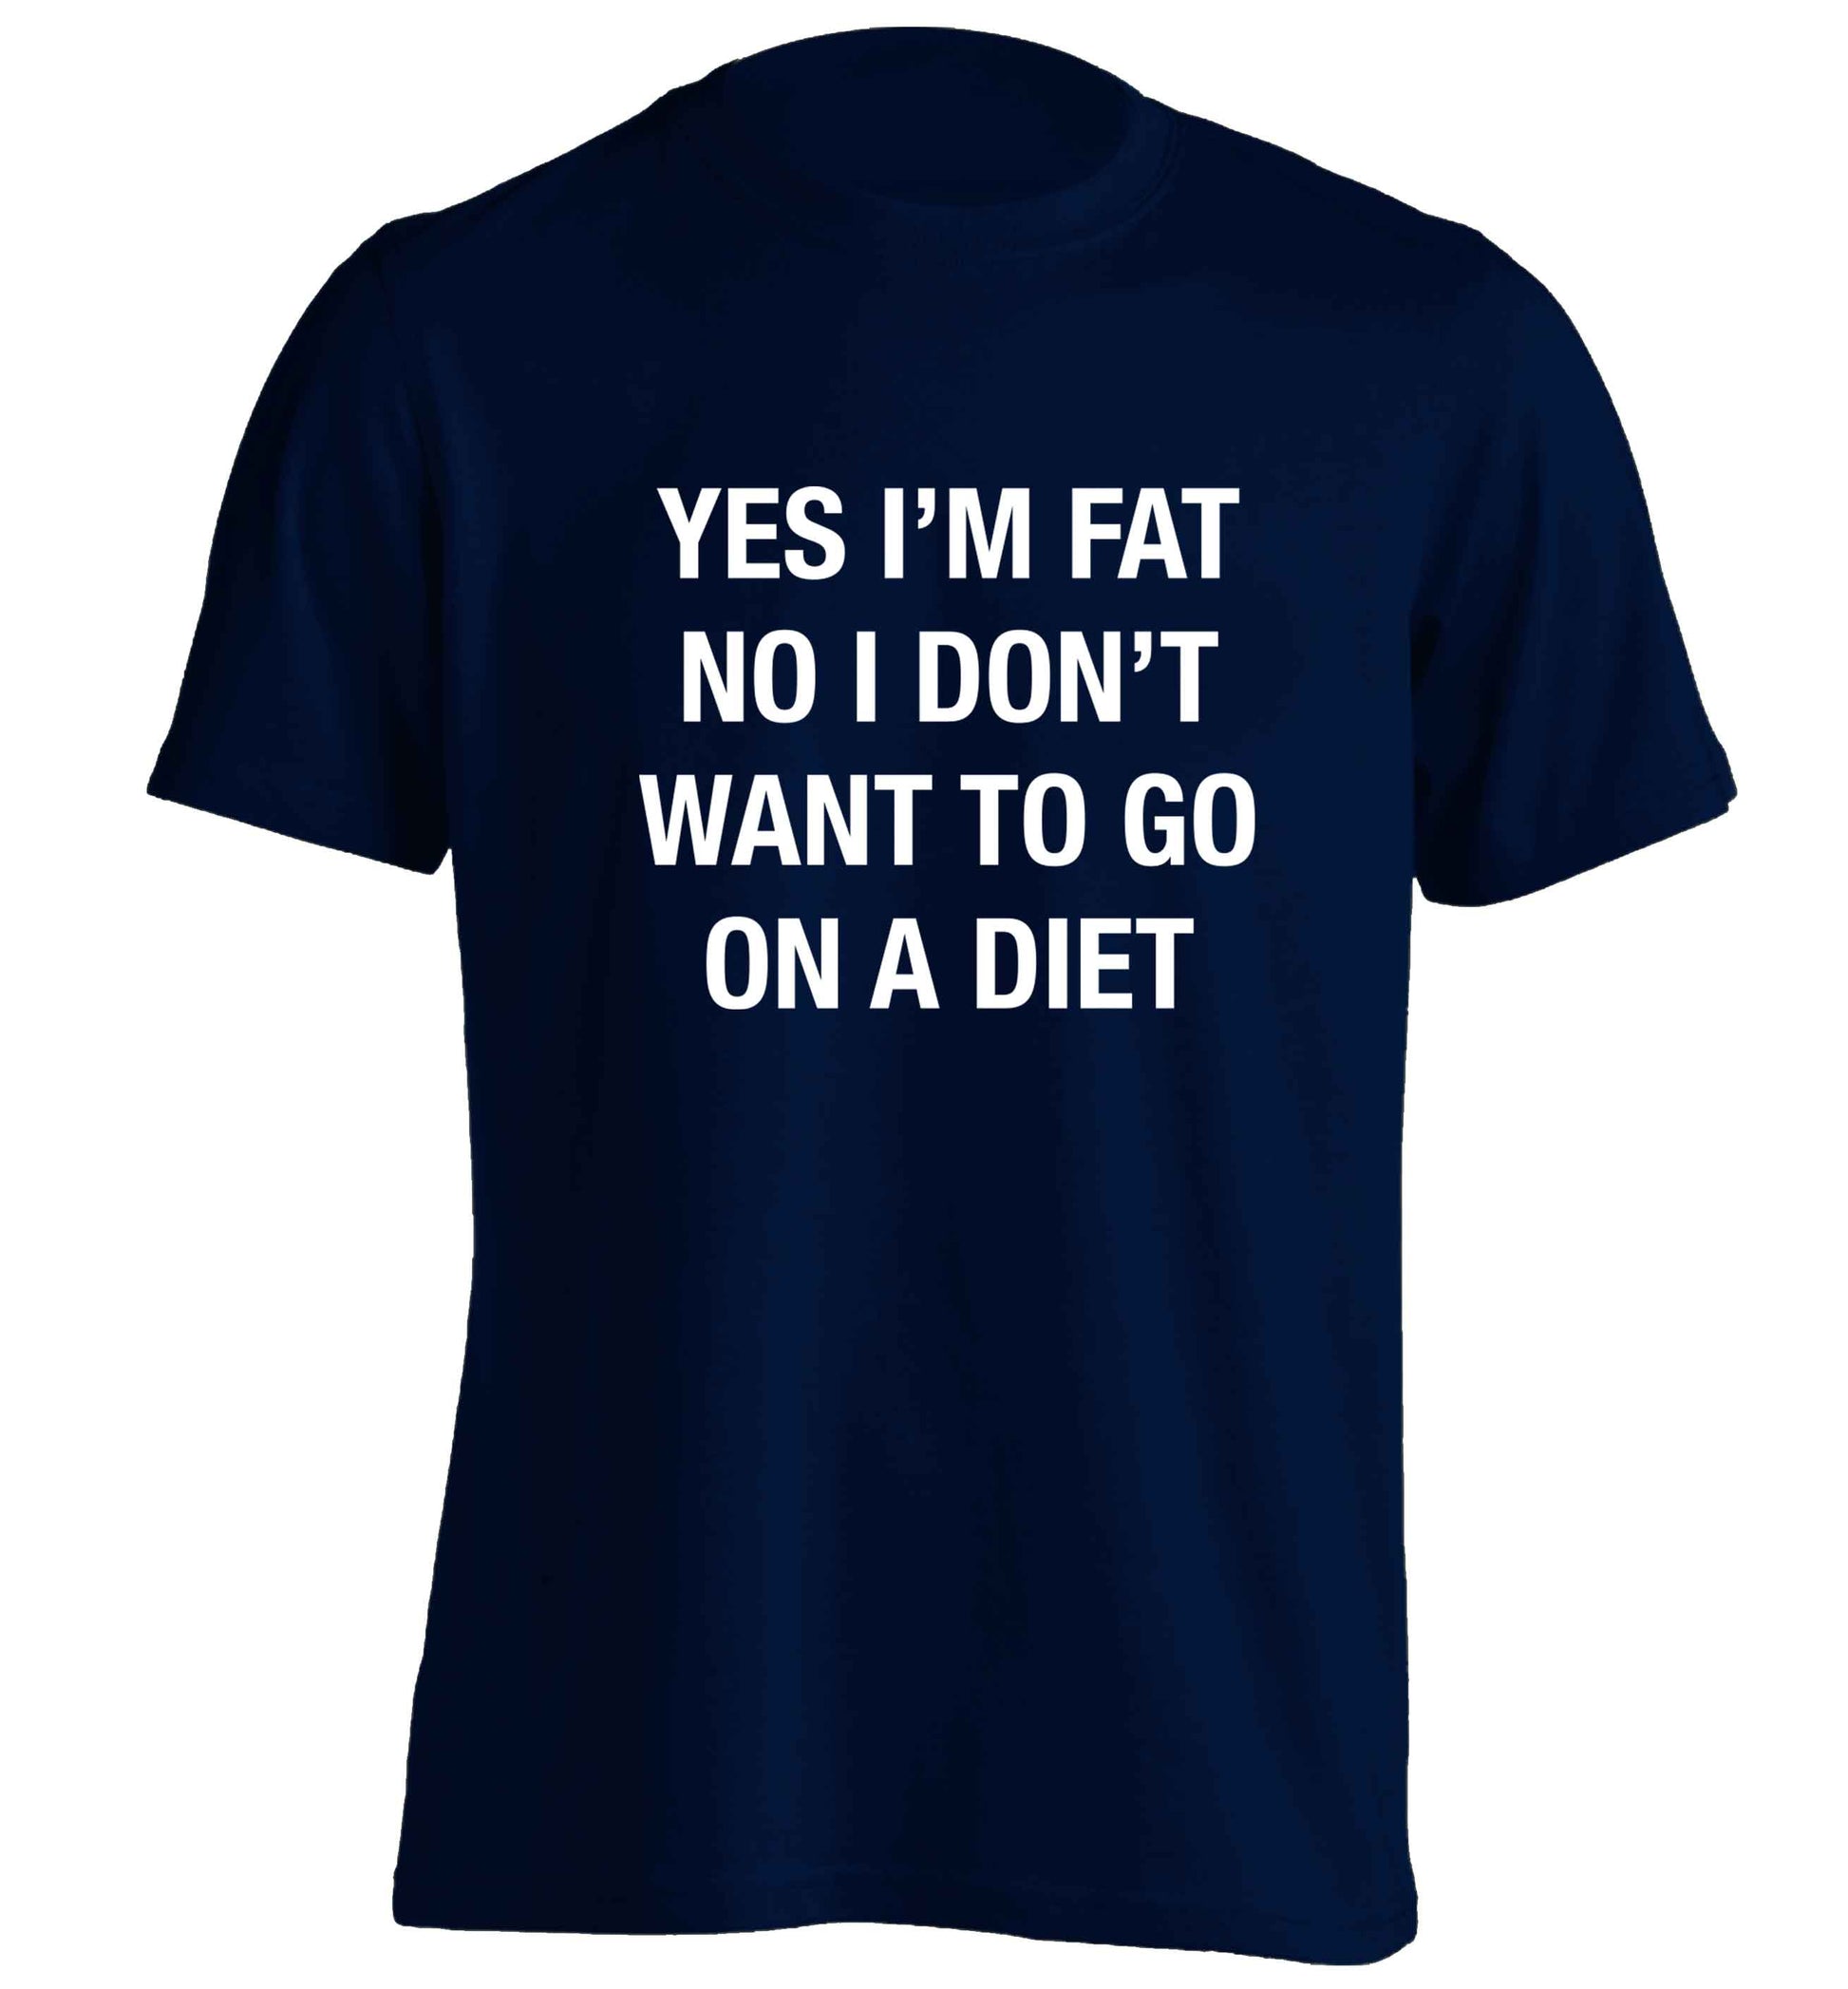 Yes I'm fat, no I don't want to go on a diet adults unisex navy Tshirt 2XL